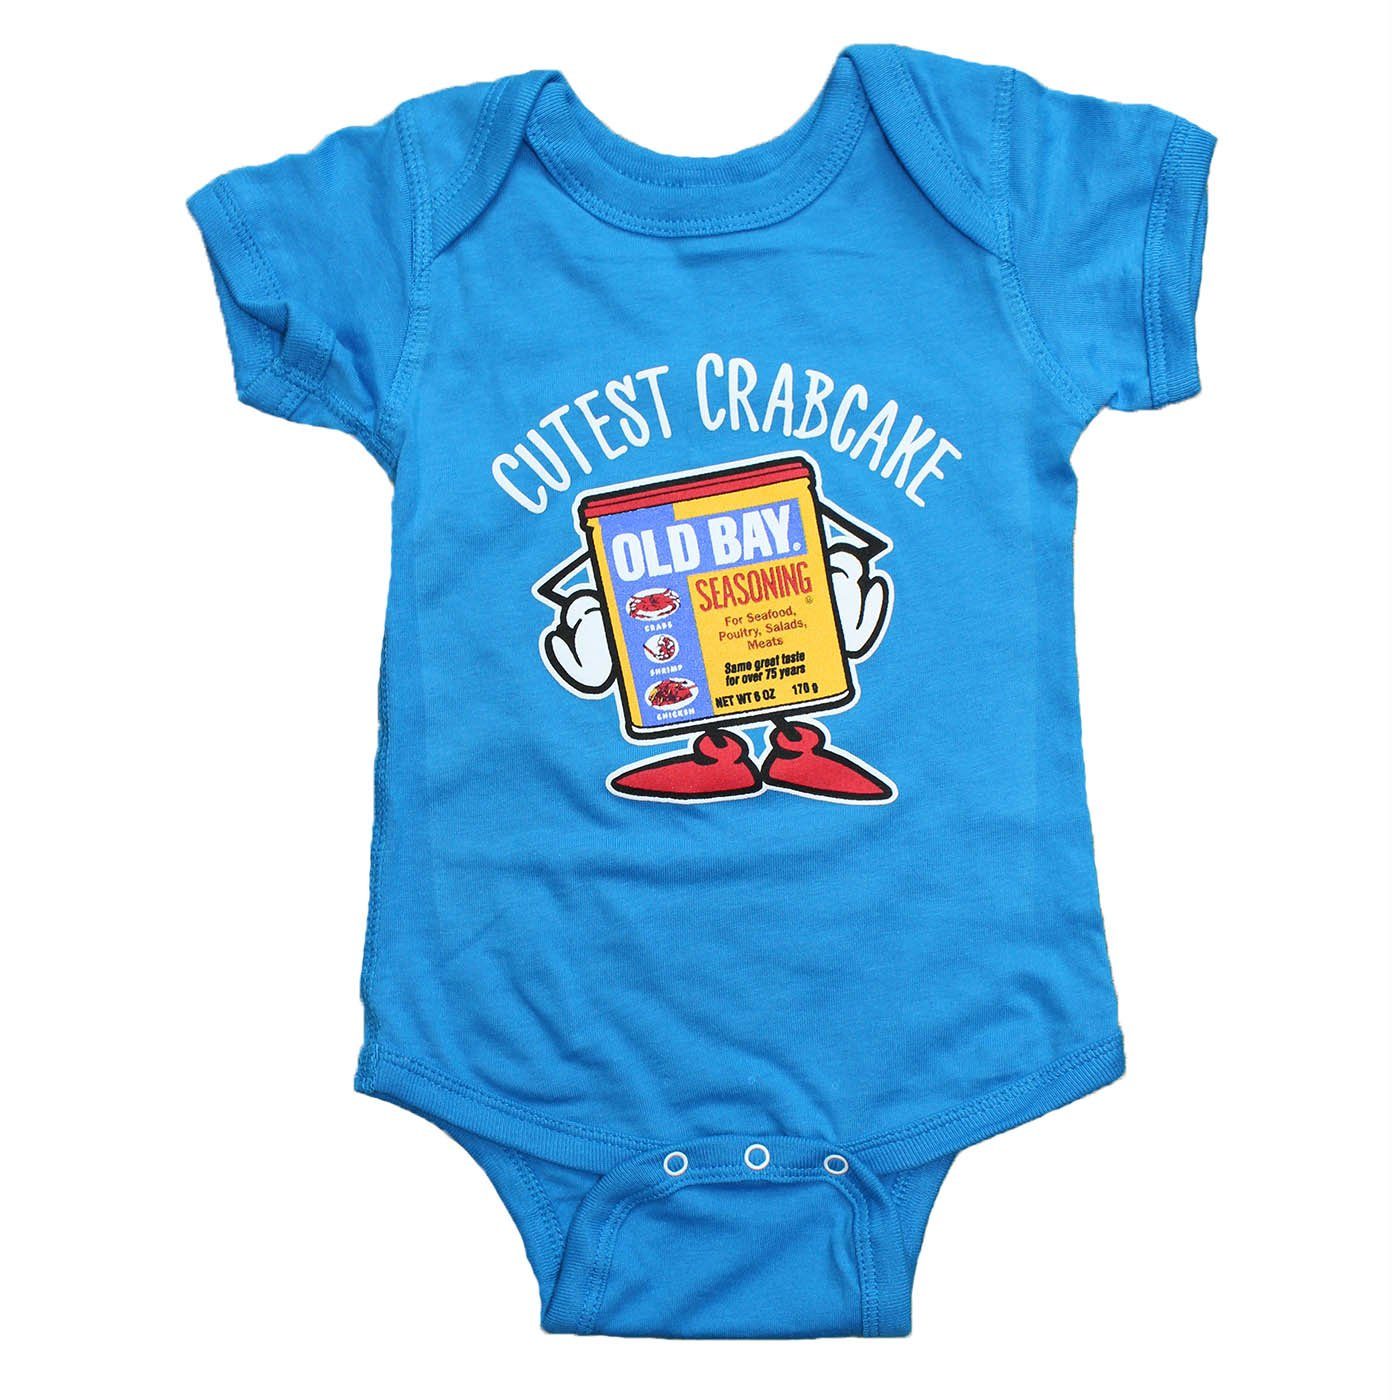 Cutest Crabcake (Cobalt) / Baby Onesie - Route One Apparel